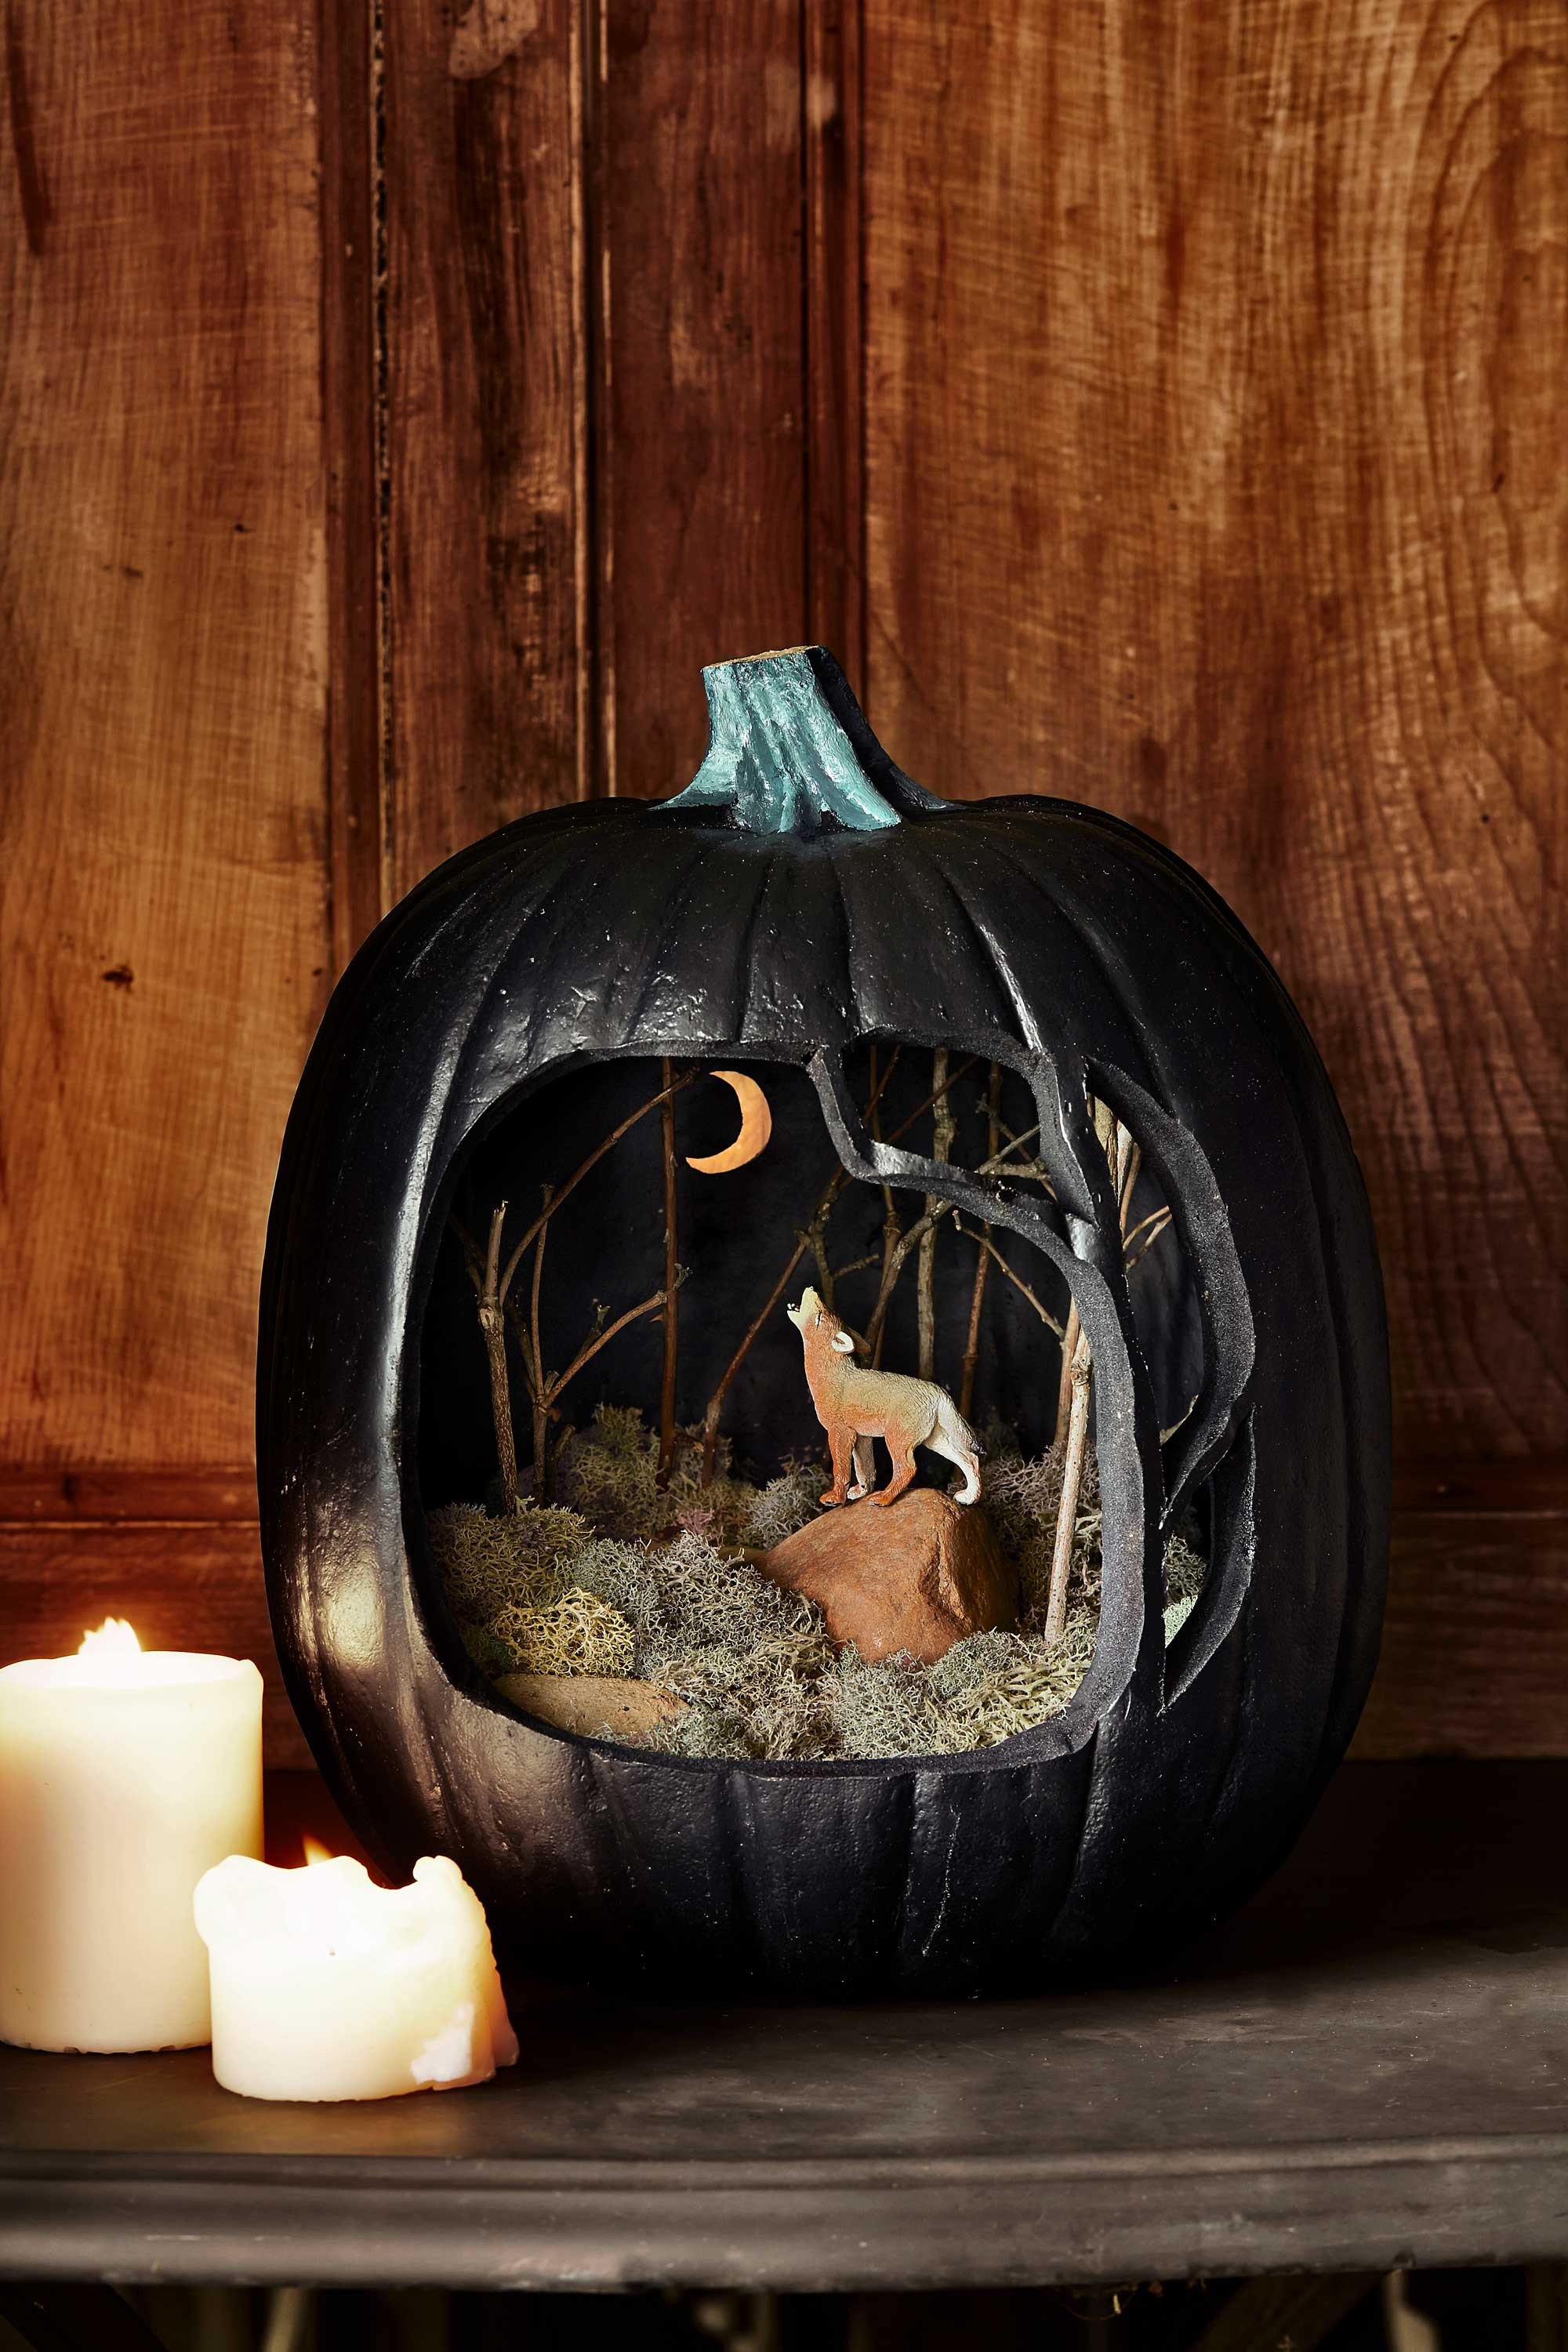 Best ideas about Halloween Craft Ideas For Adults
. Save or Pin 60 Easy Halloween Craft Ideas Halloween DIY Craft Now.